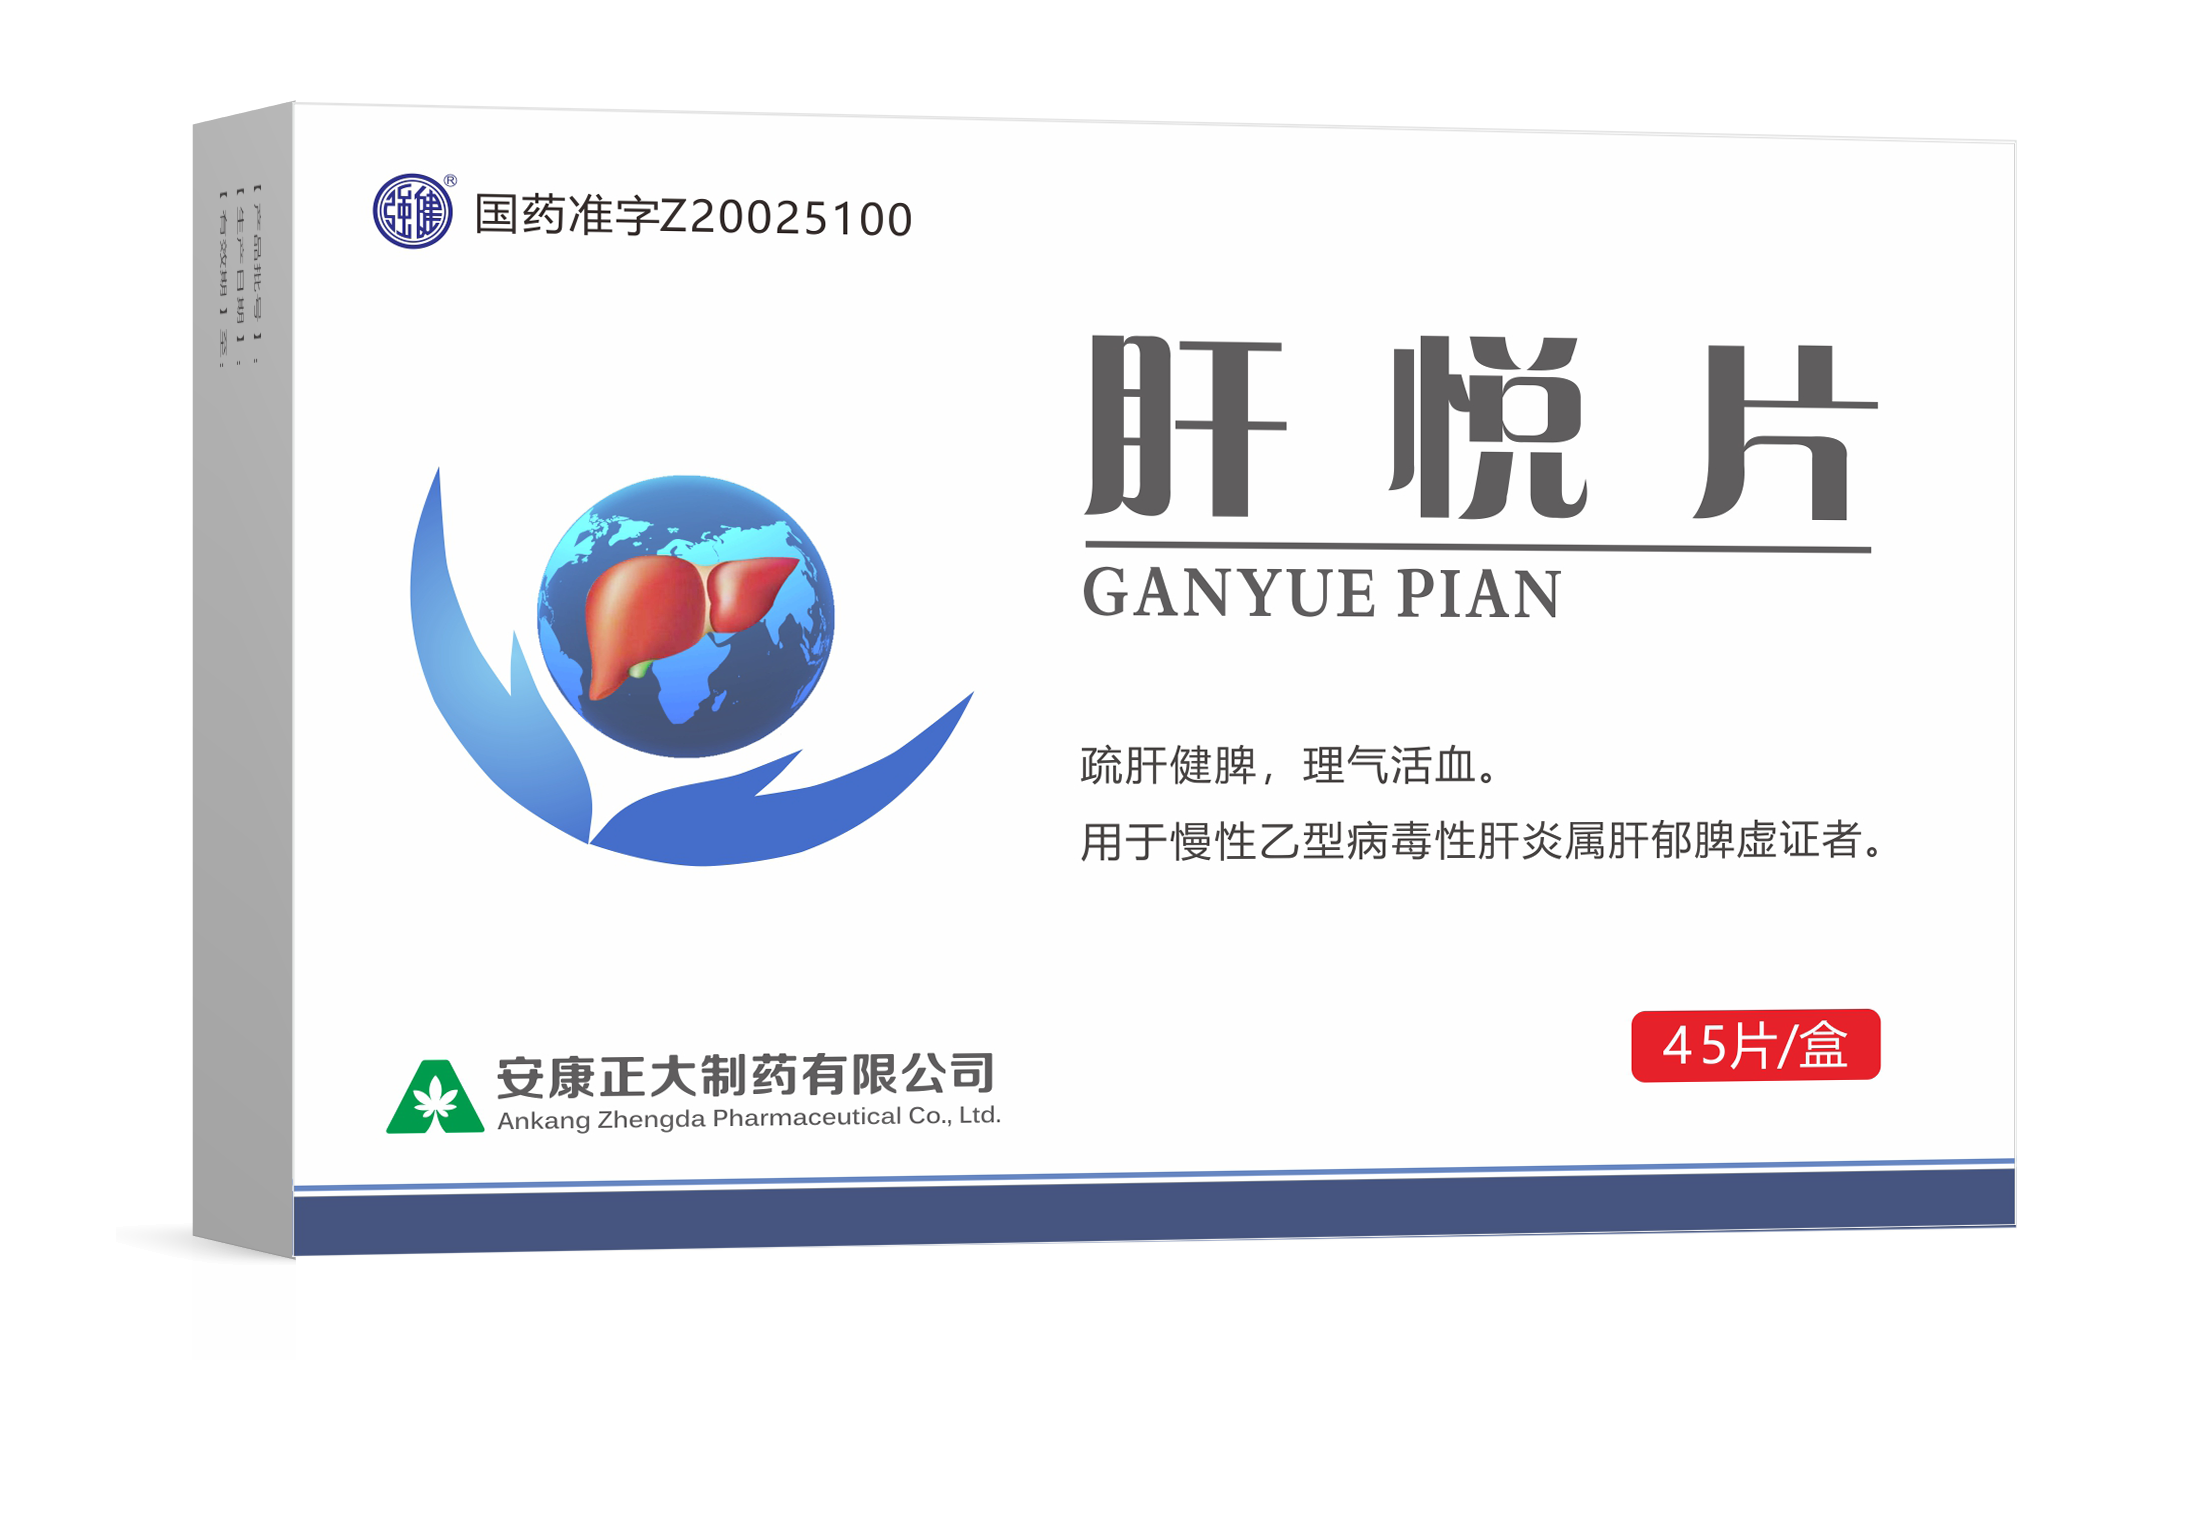 Ganyue tablets